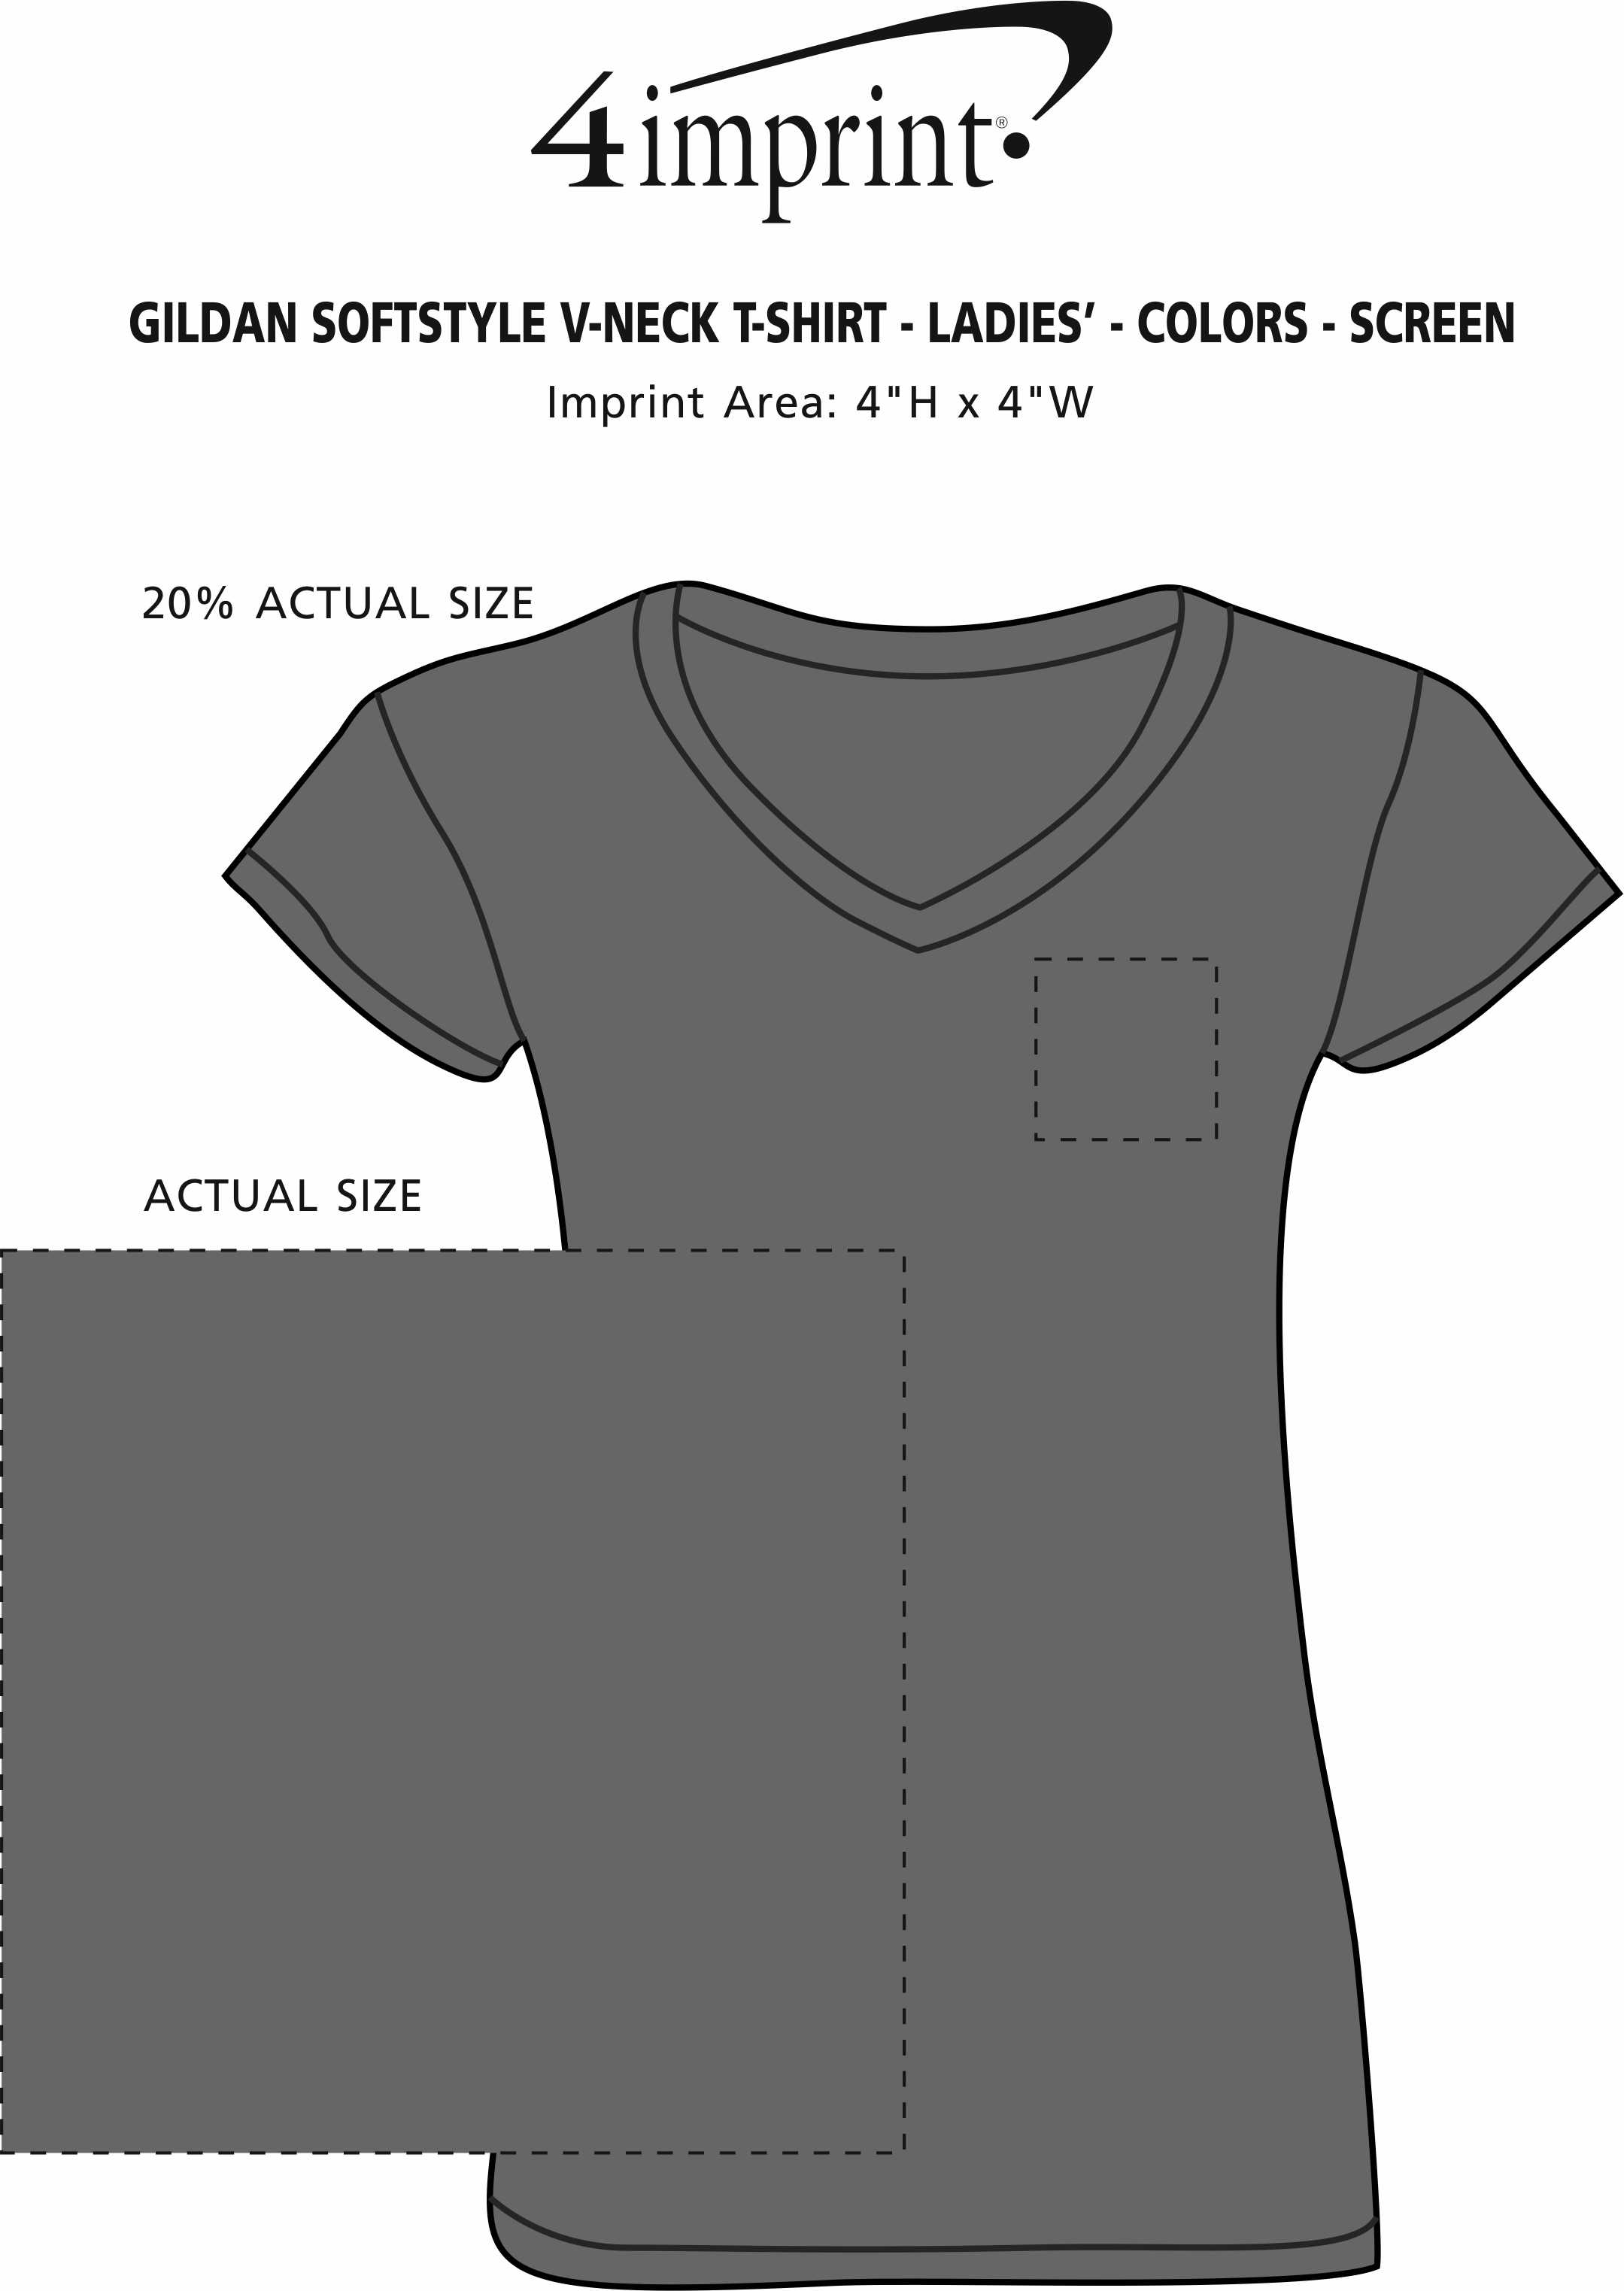 Imprint Area of Gildan Softstyle V-Neck T-Shirt - Ladies' - Colors - Screen